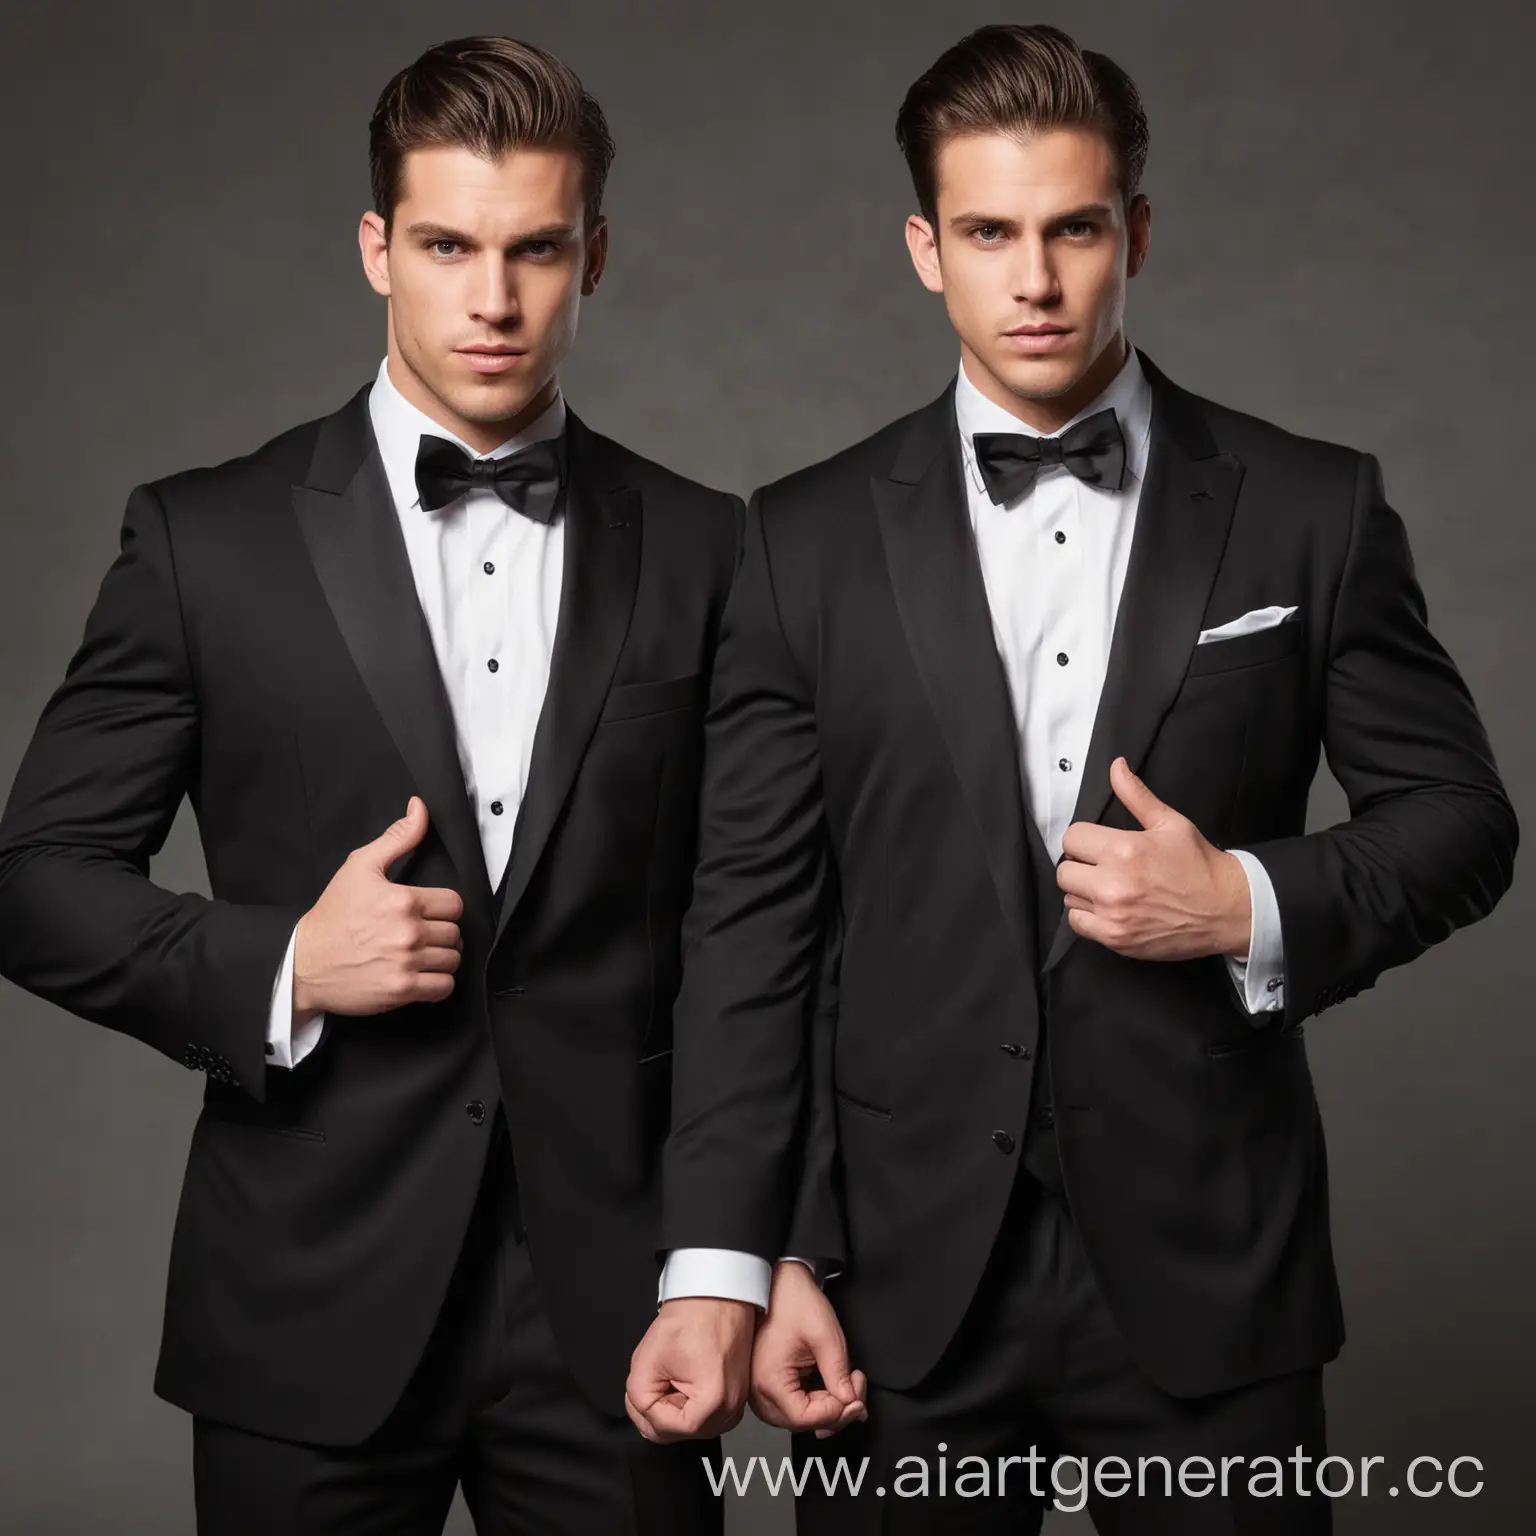 Elegant-Men-in-Tuxedos-Engage-in-Intense-Confrontation